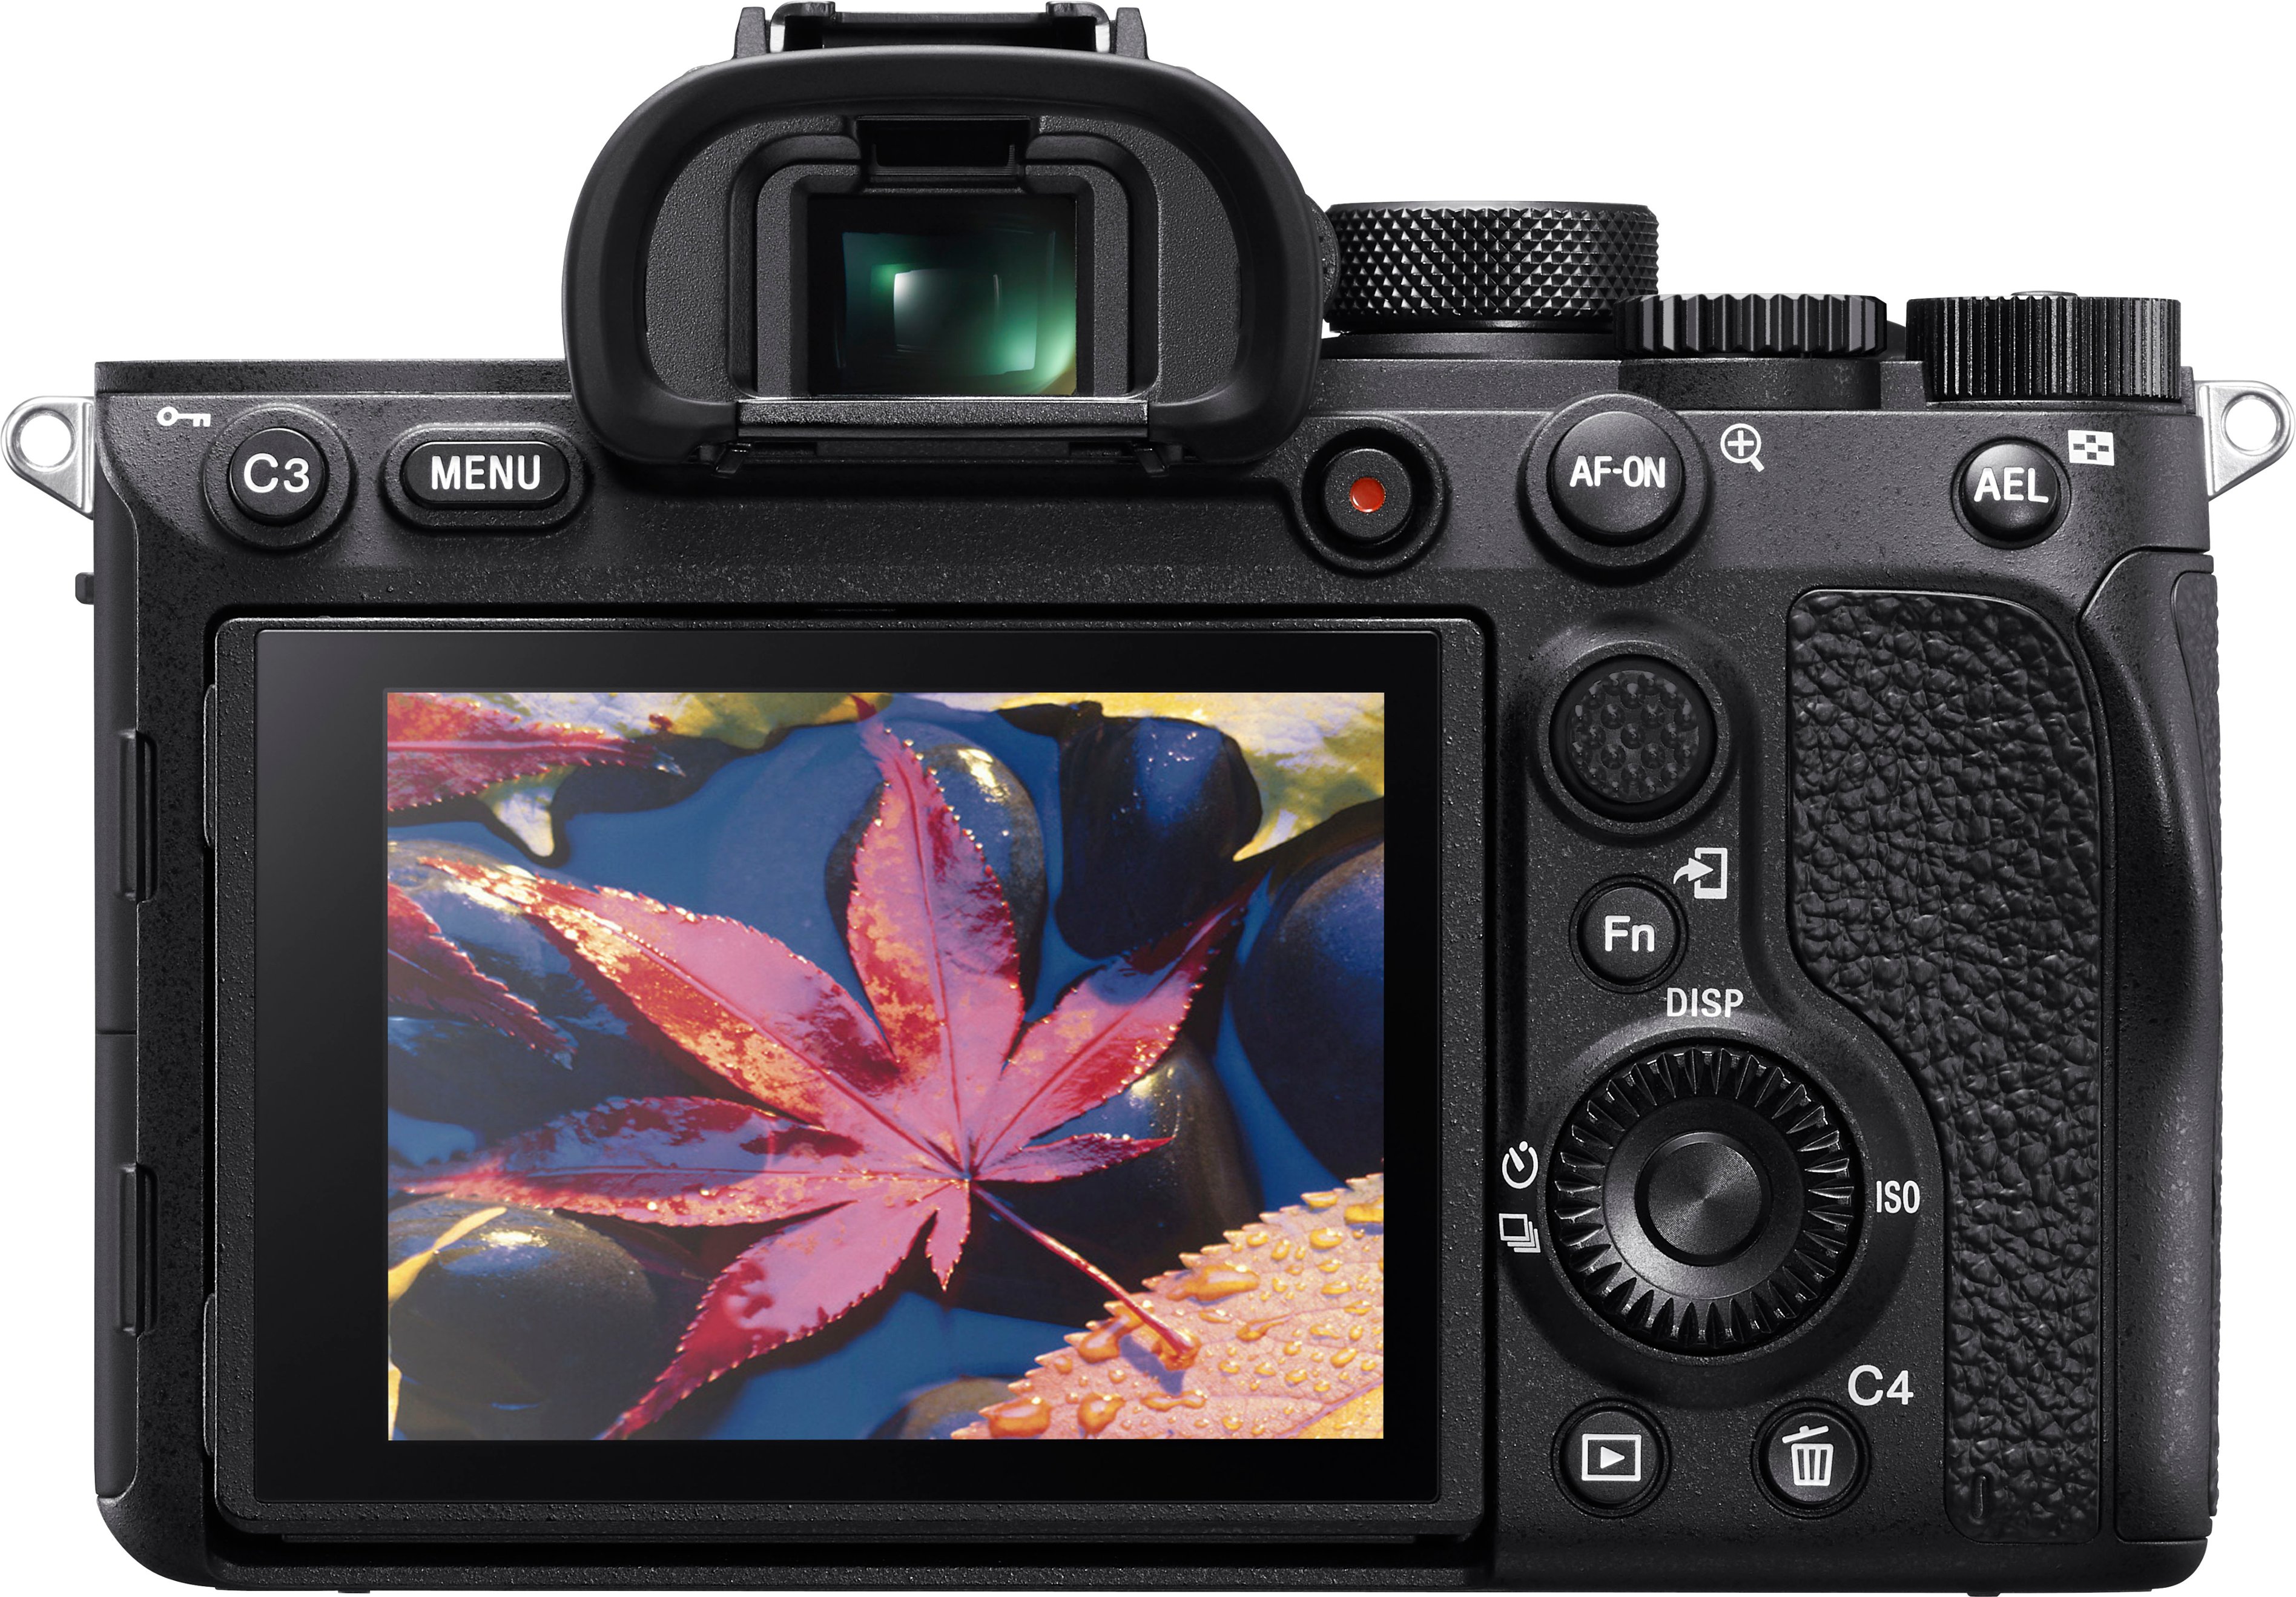 Sony a7 IV Full-Frame Mirrorless Camera